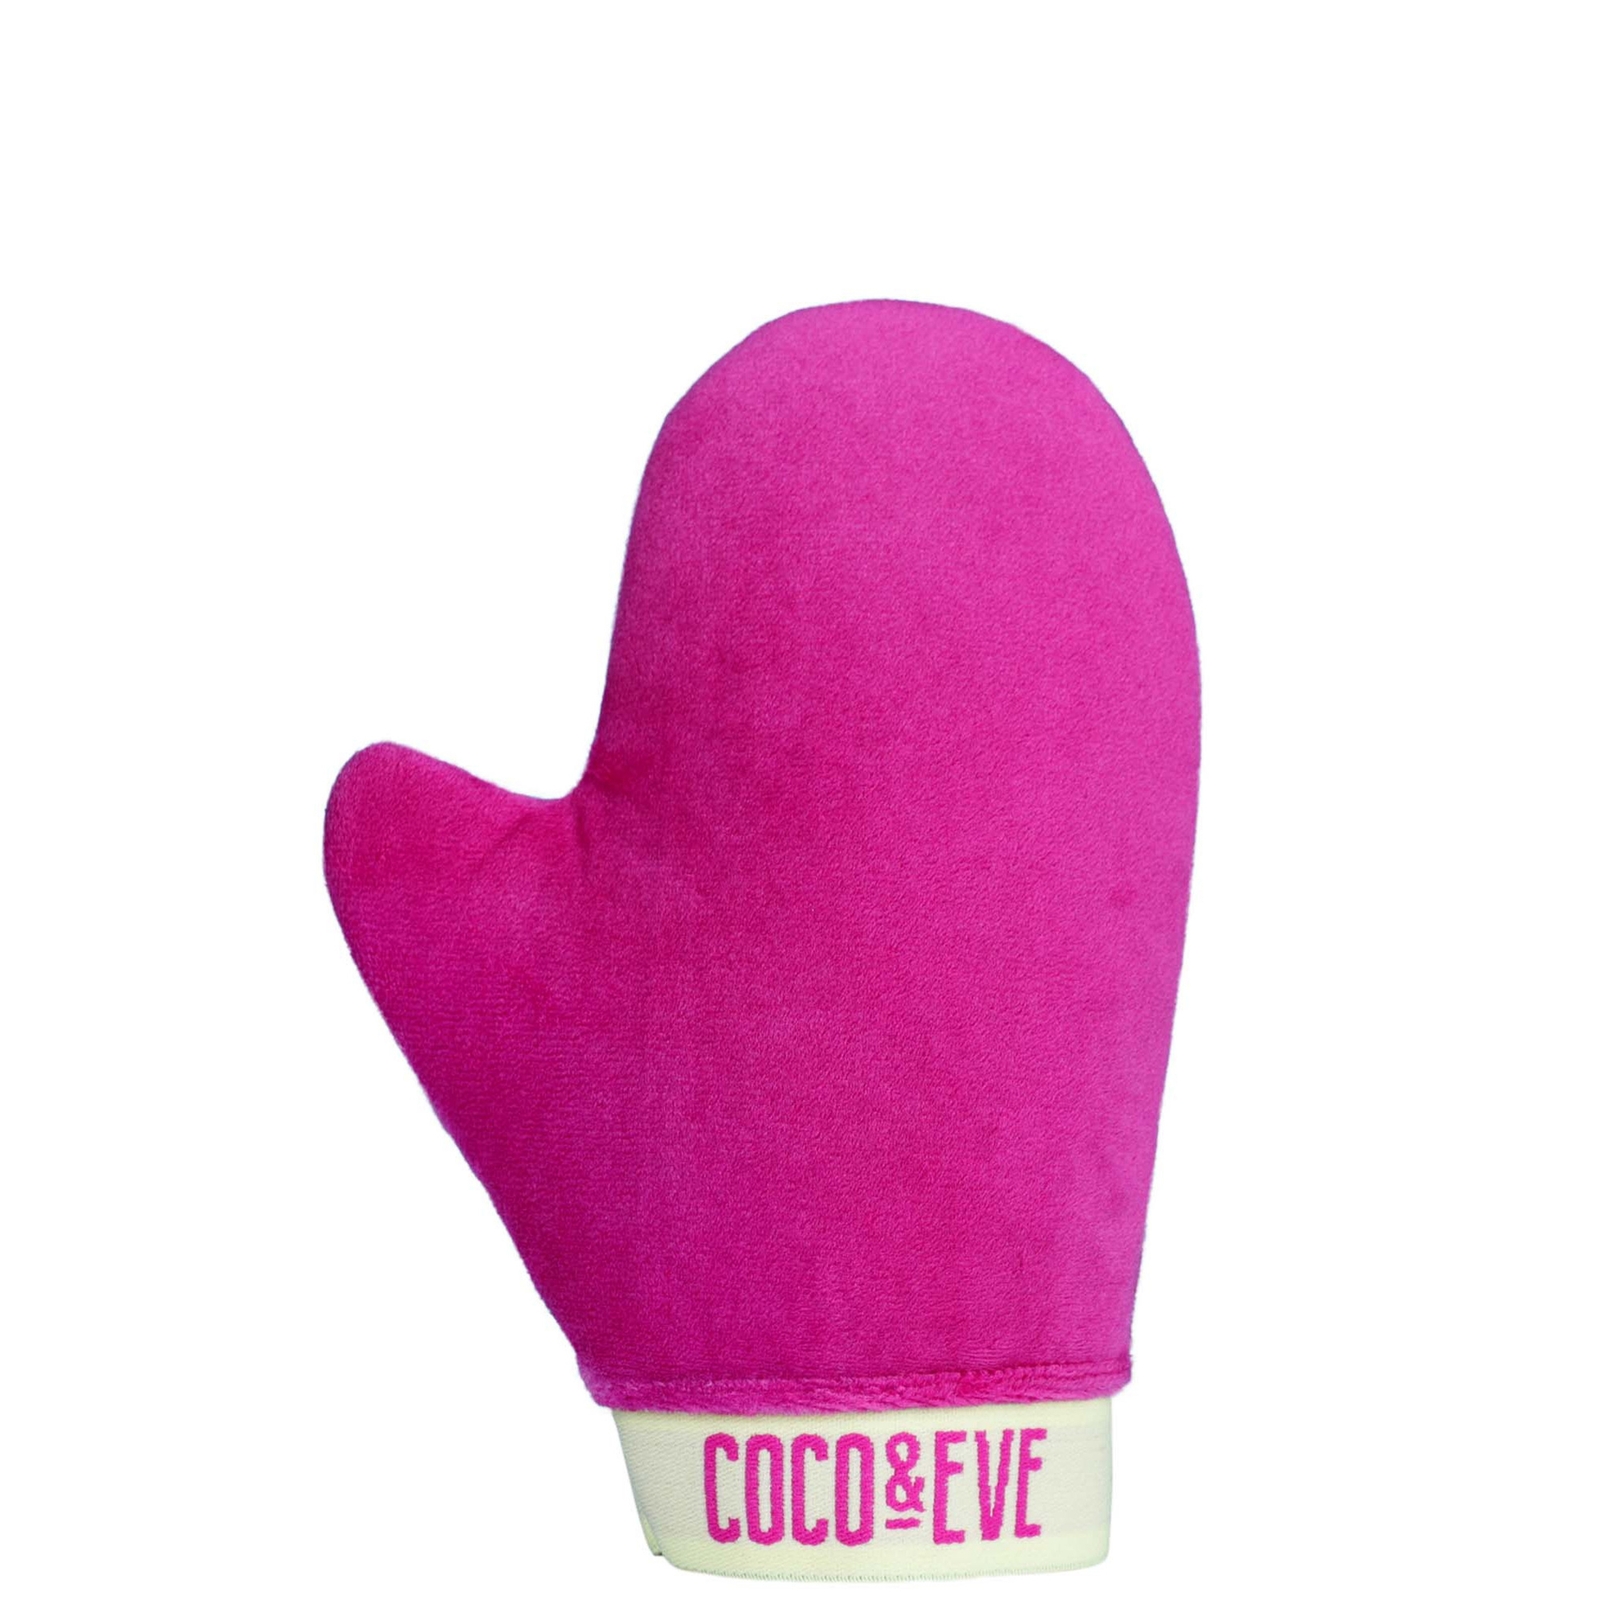 Coco & Eve Velvet Self Tan Application Mitt In Pink